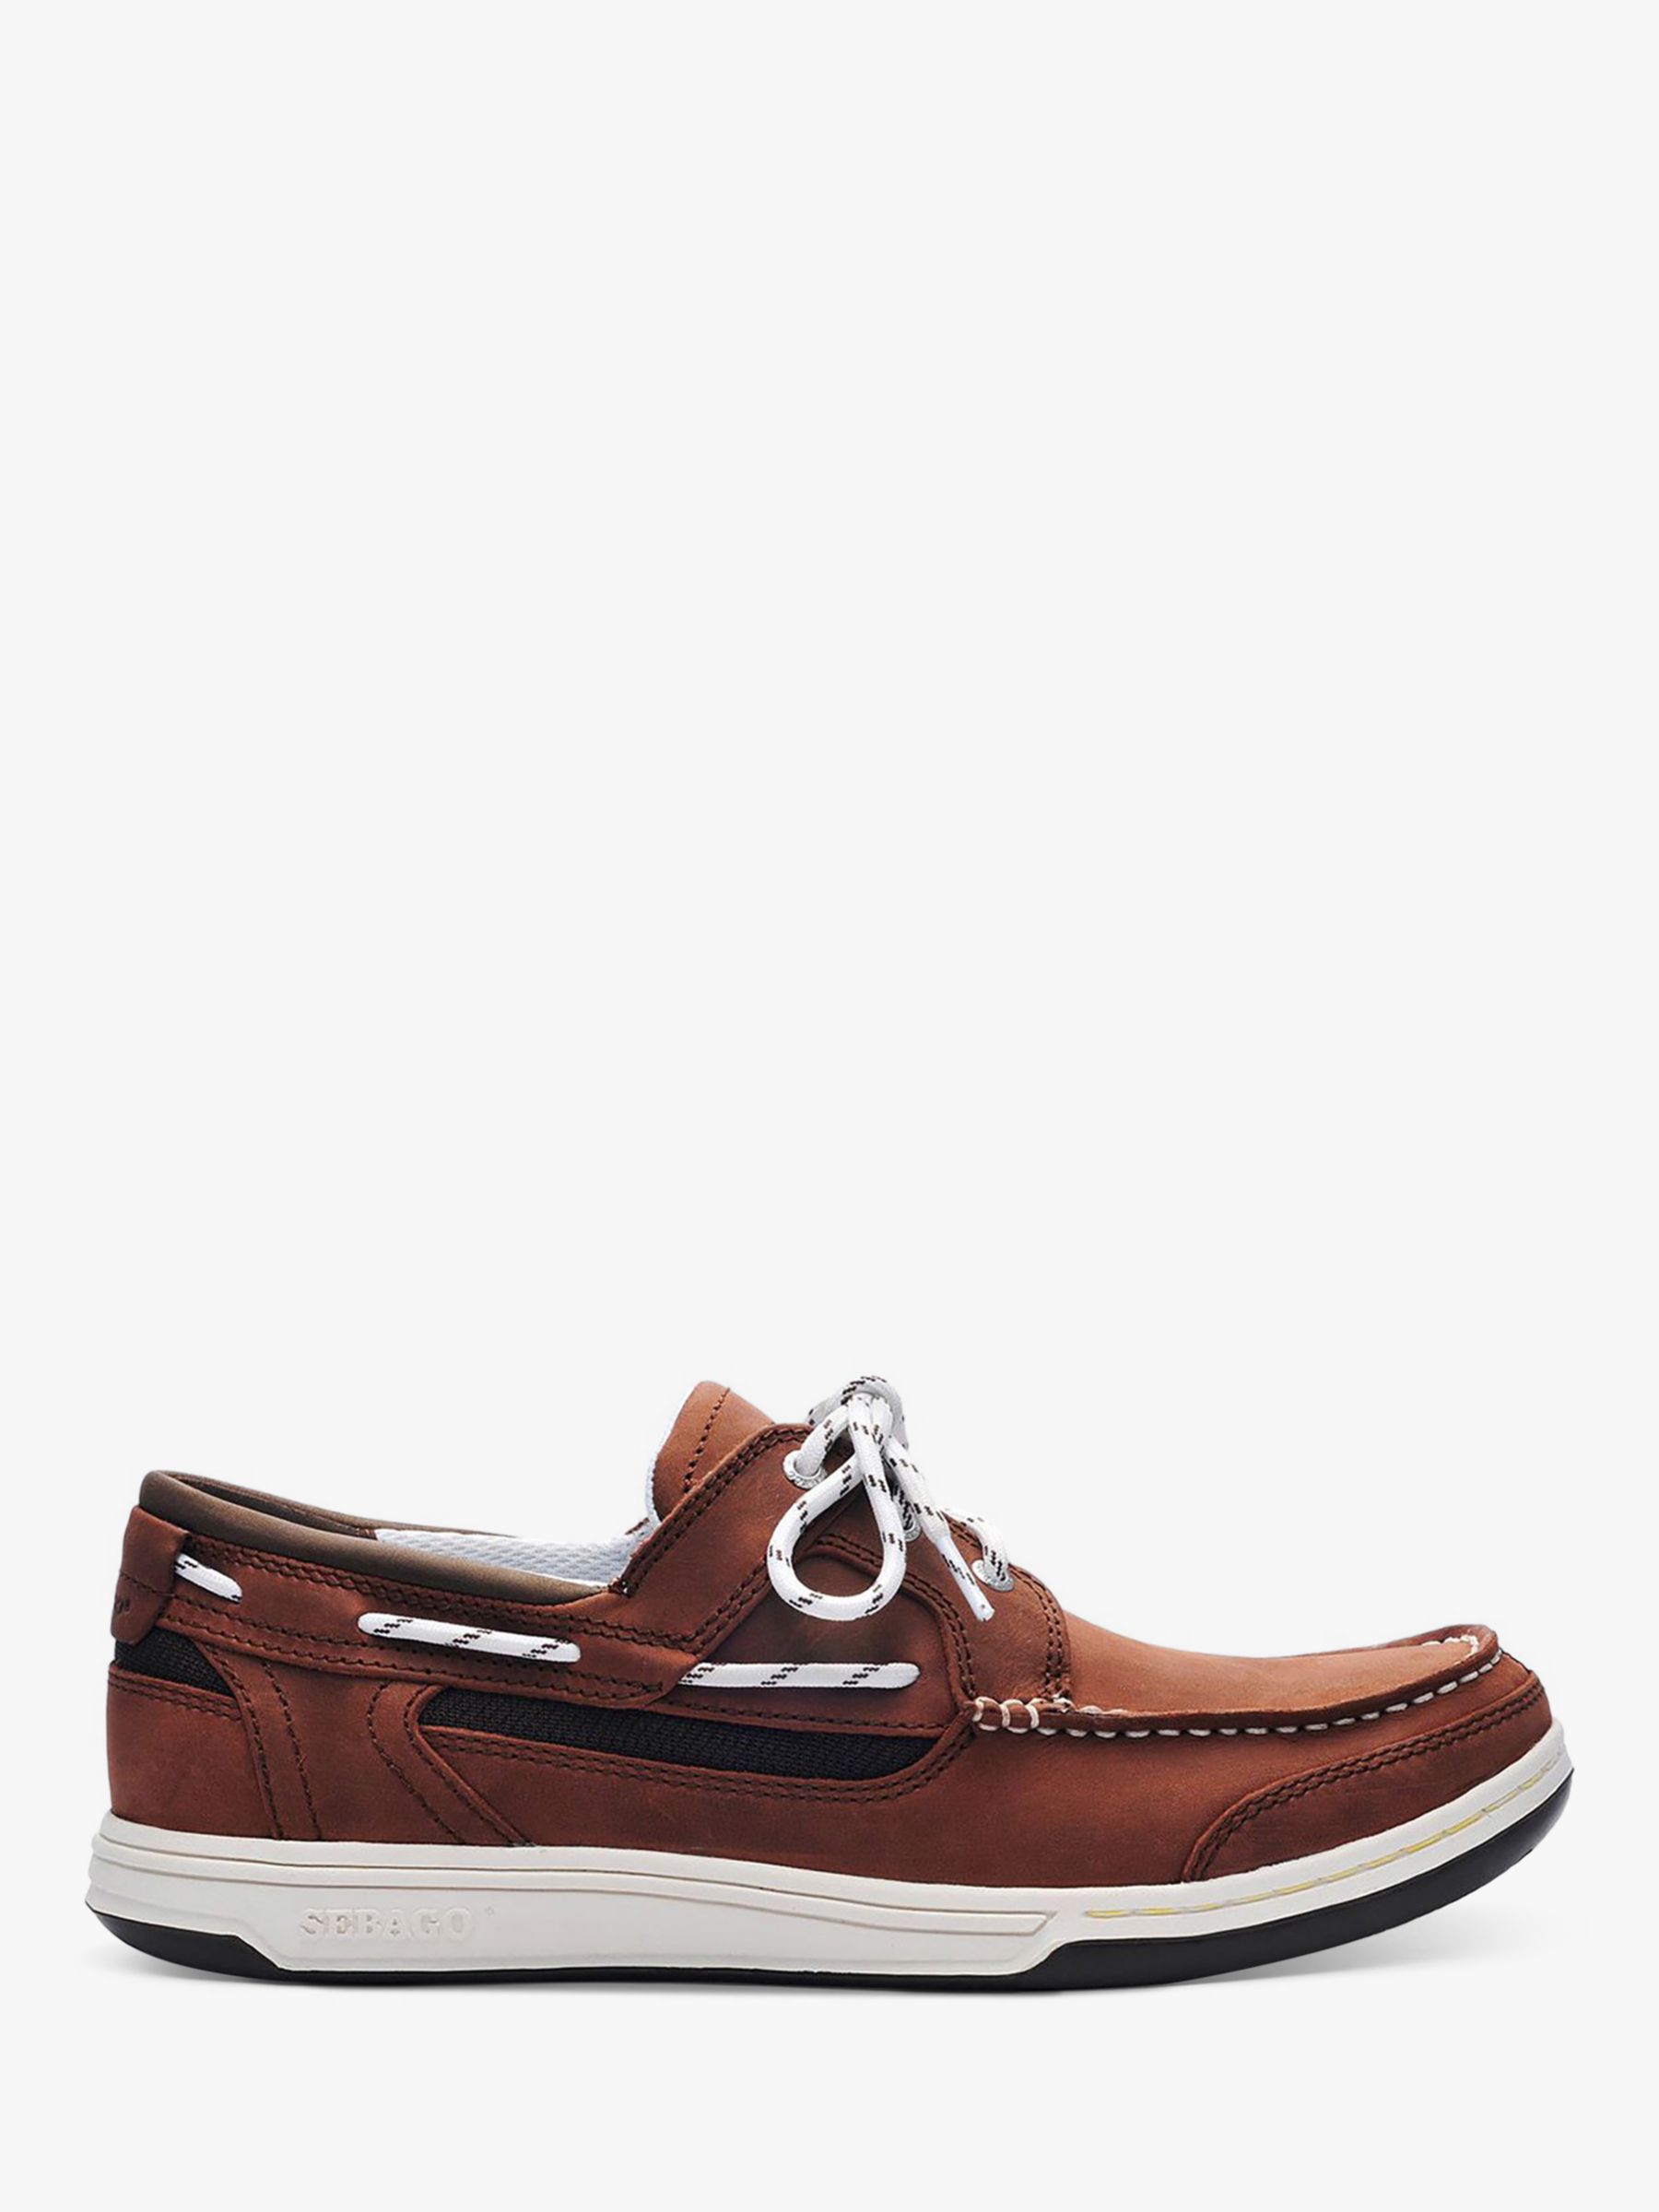 Sebago Triton Leather Boat Shoes, Dark Brown, 10